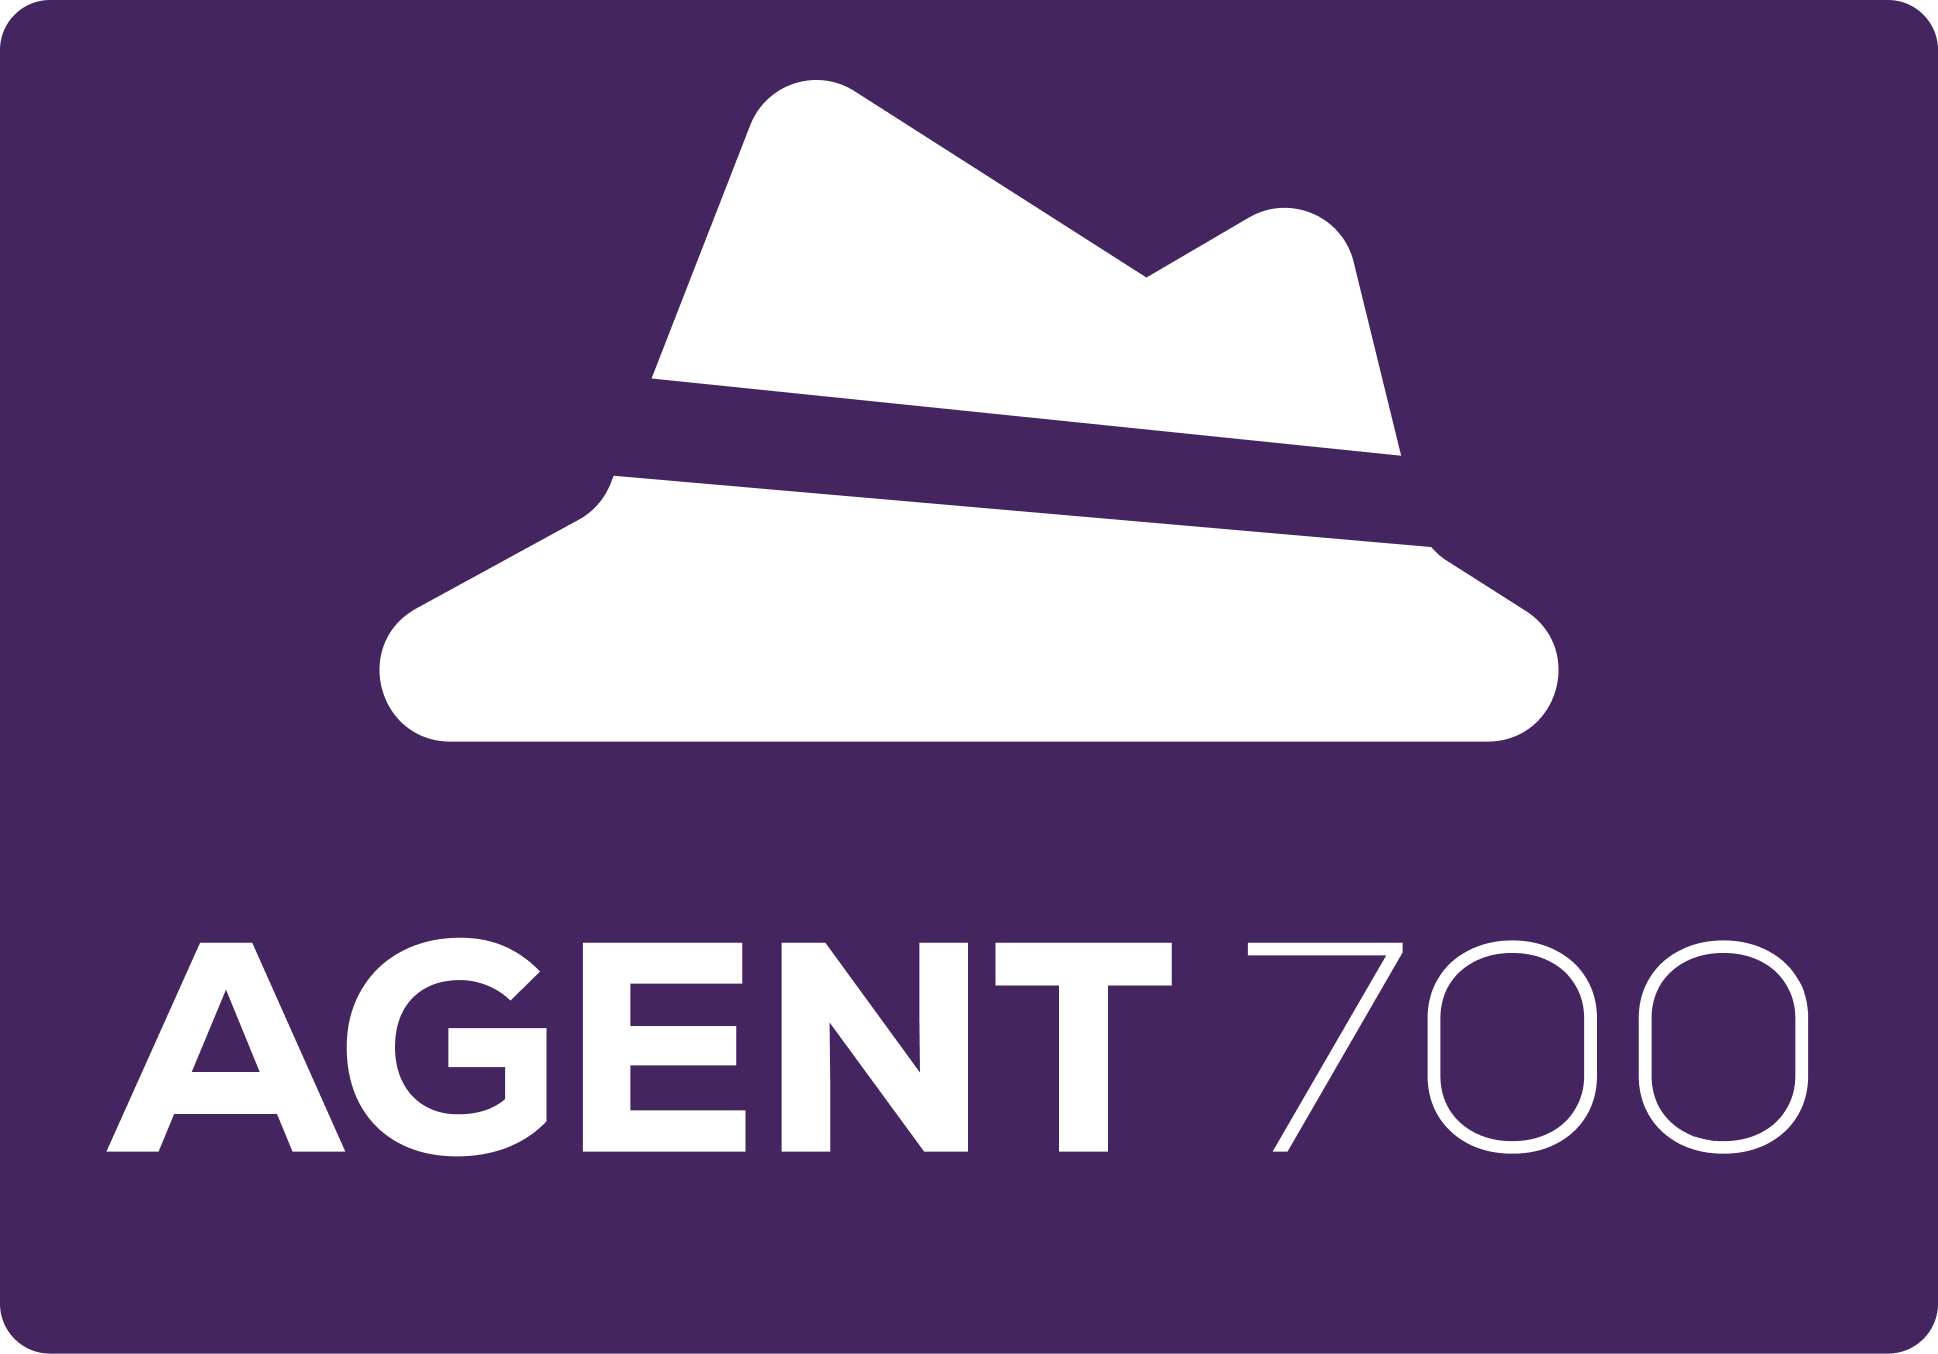 Agent 700 logo